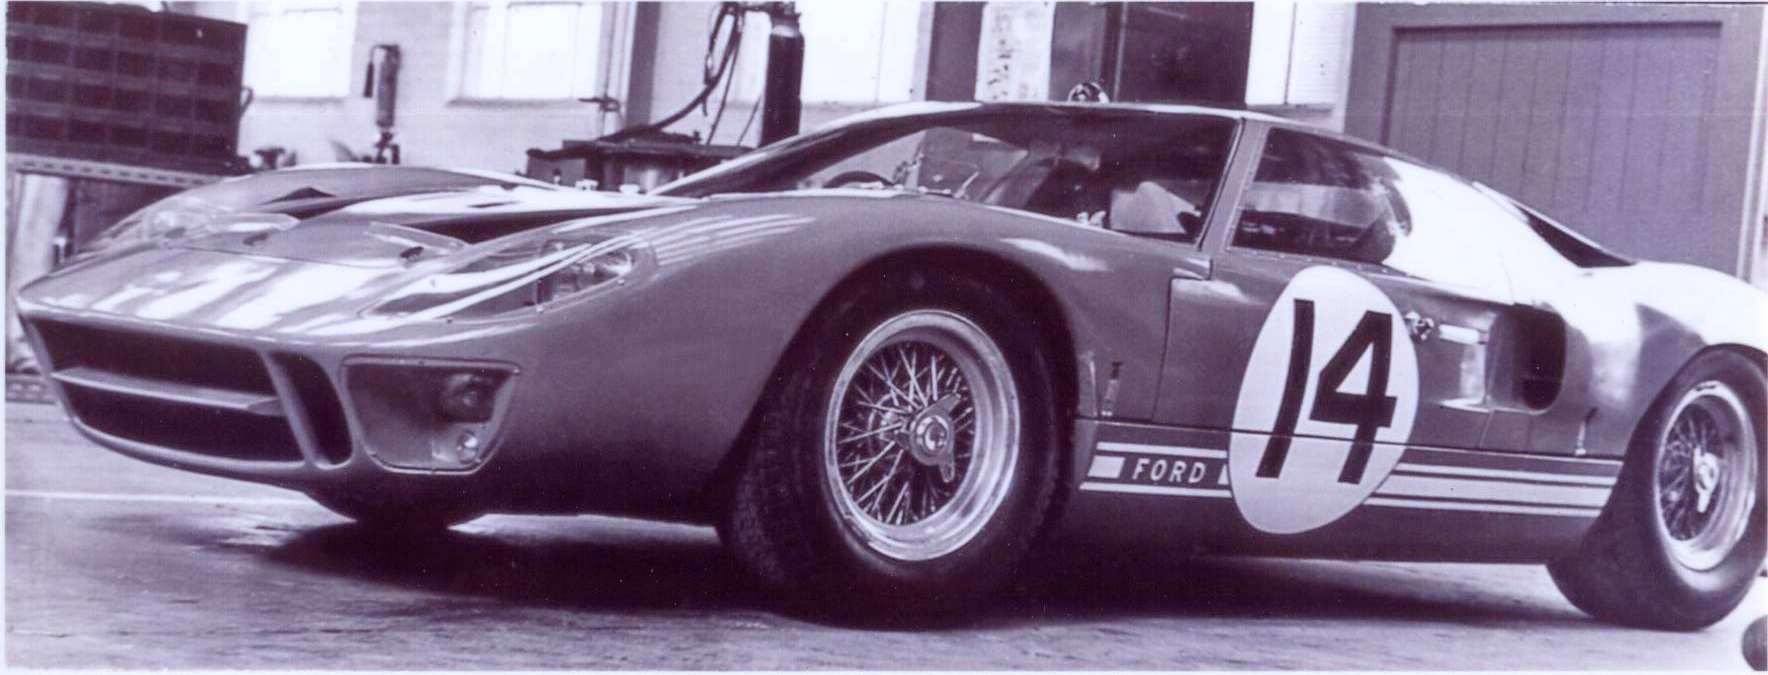 GT40 number 14.jpg